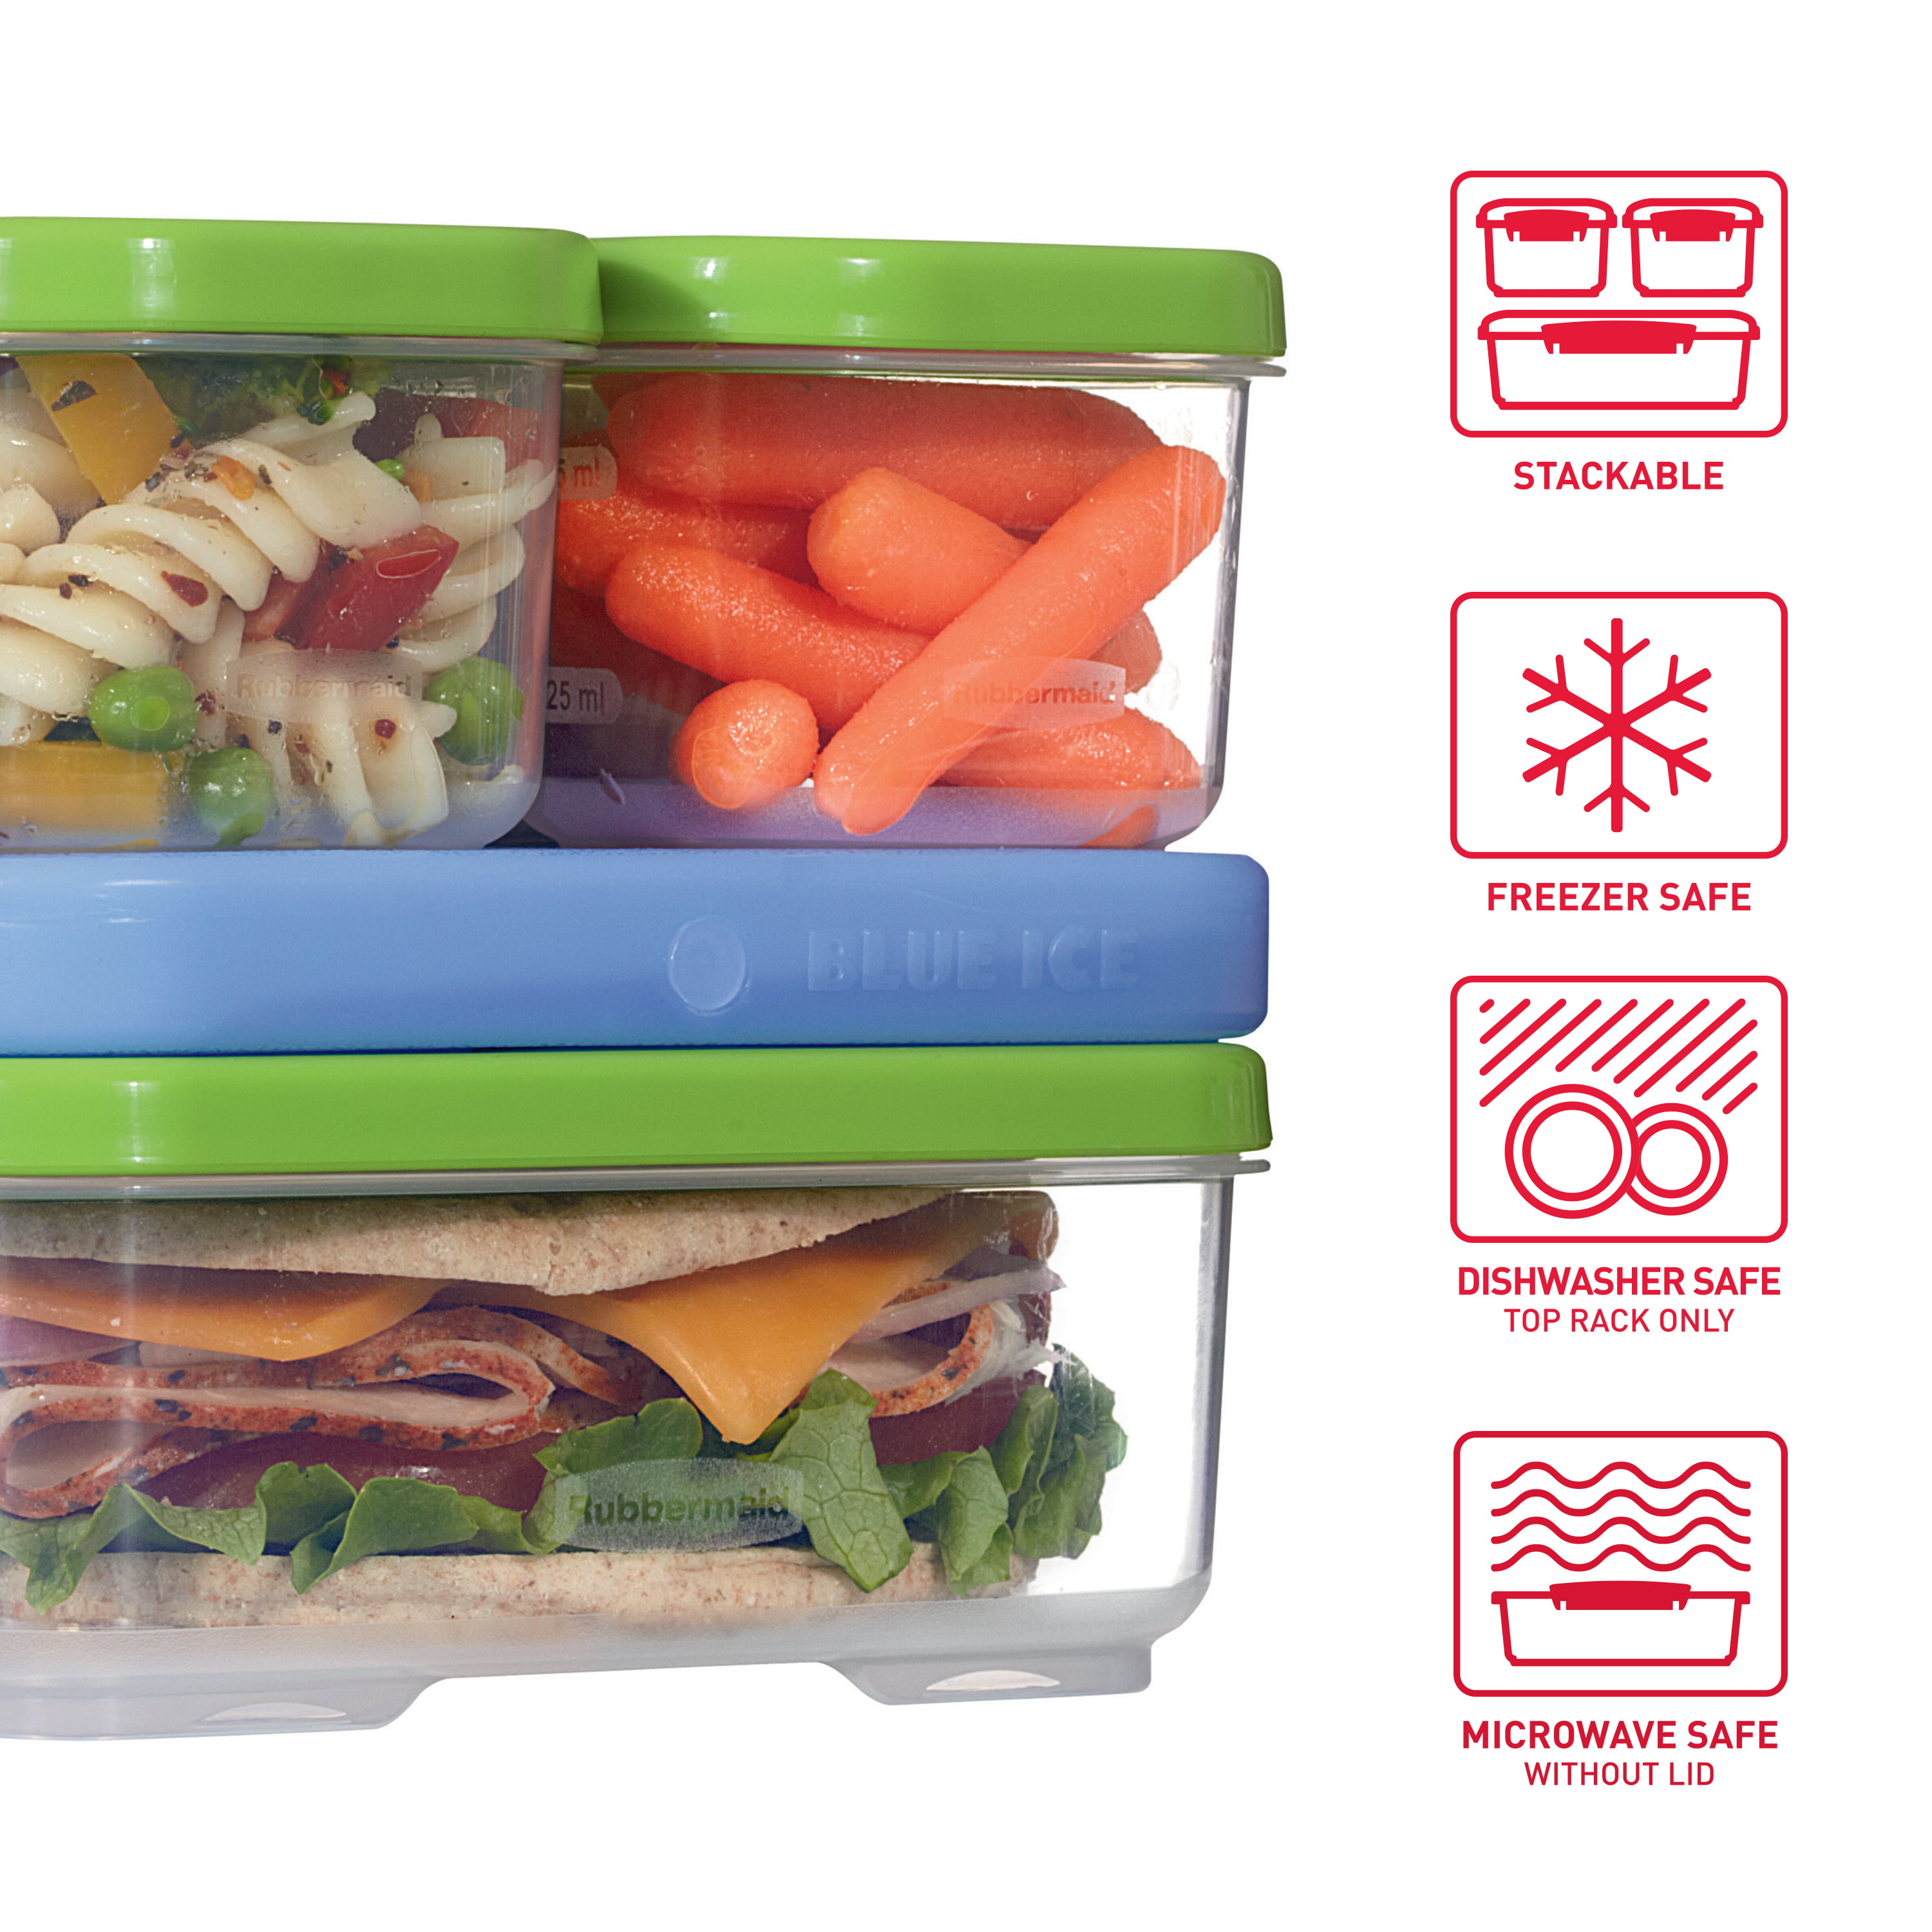 Save on Rubbermaid LunchBlox Sandwich Kit- 2 Snack, 1 Side, 1